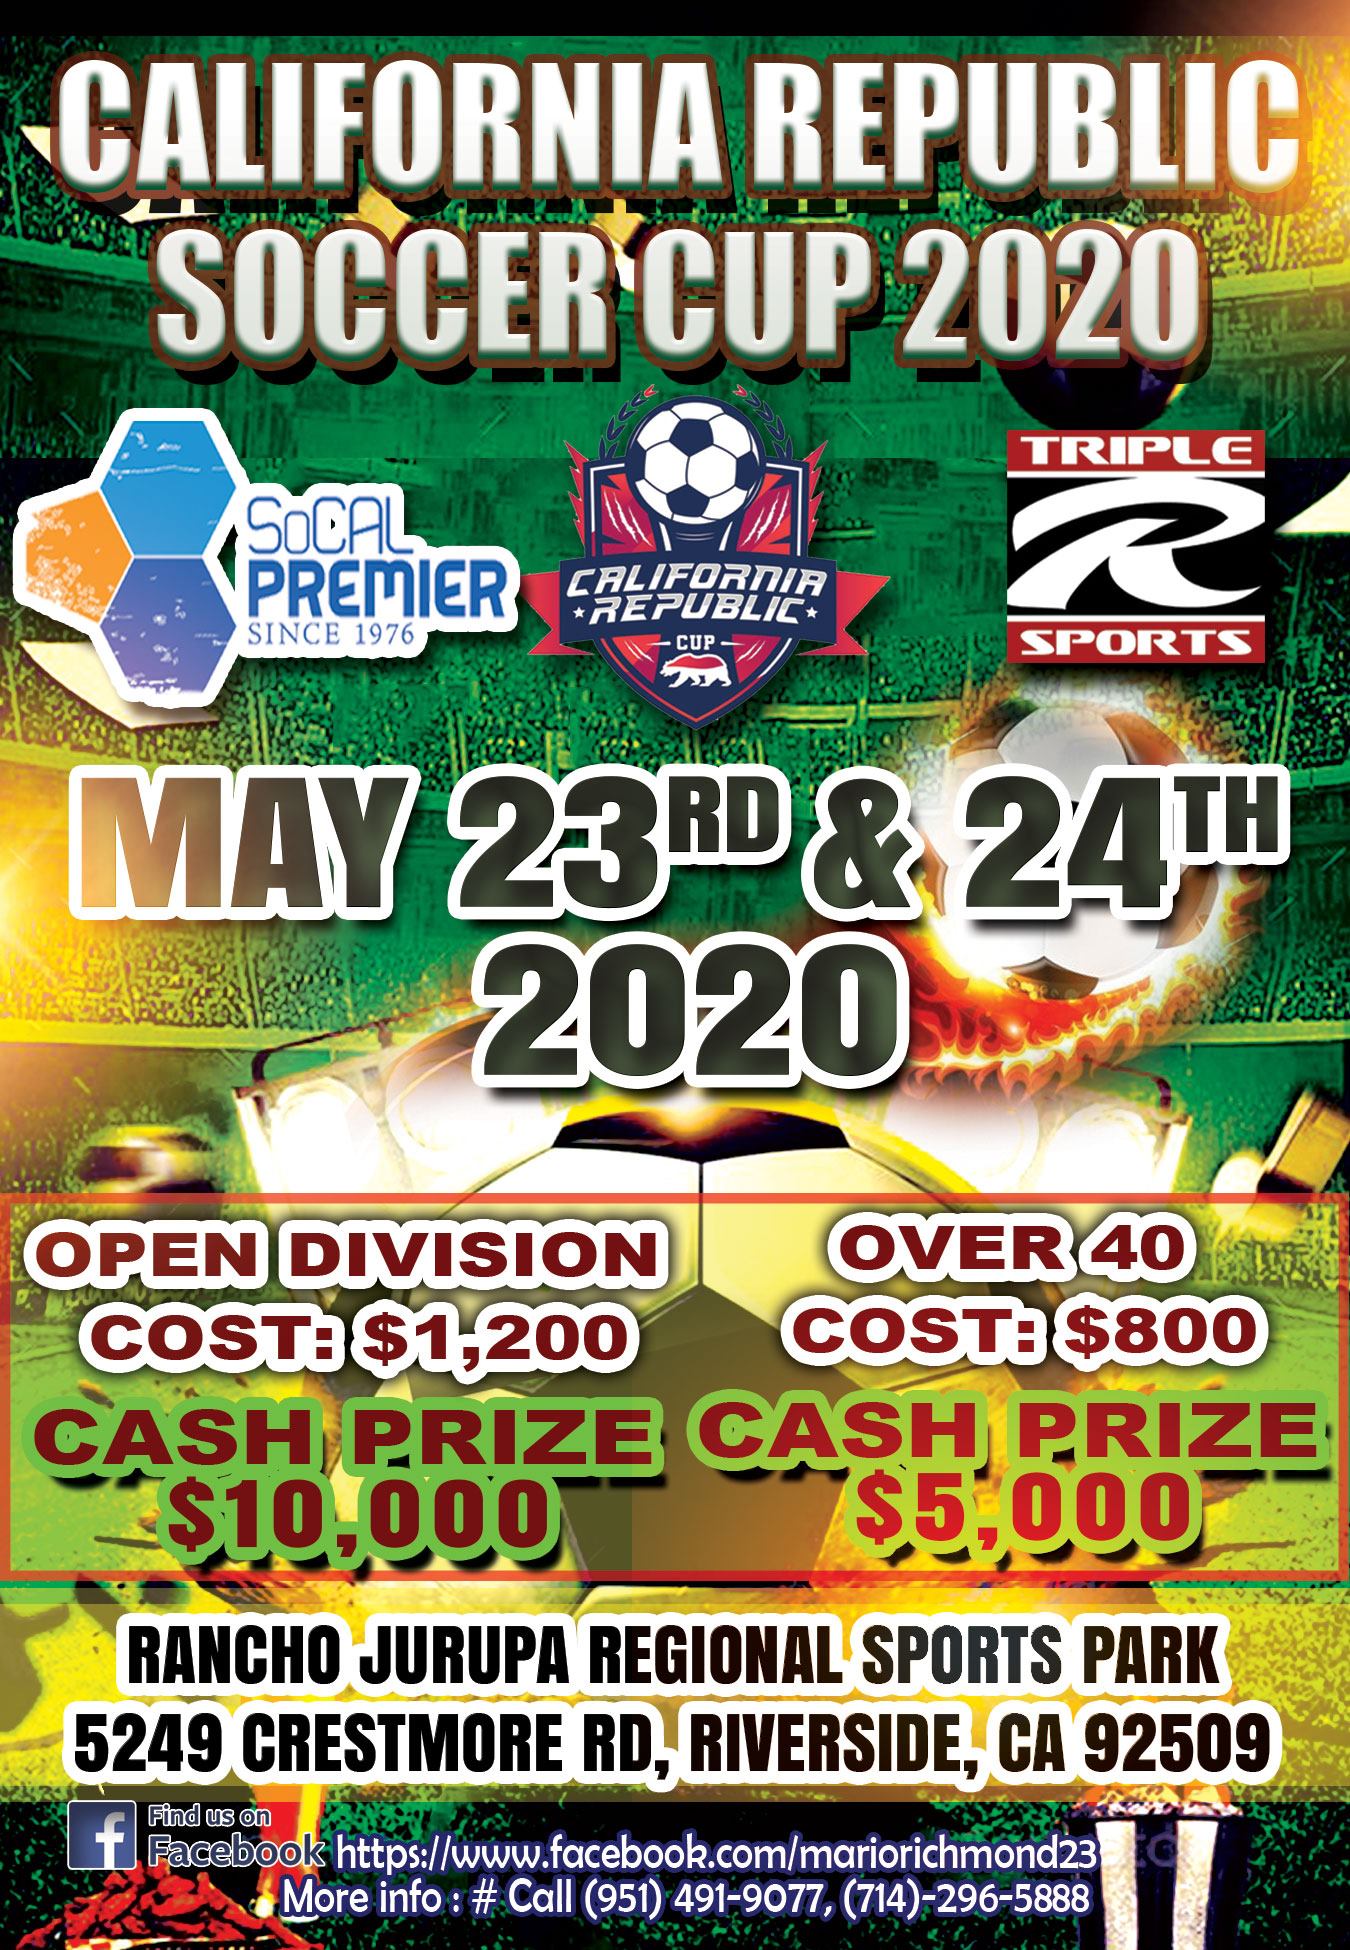 California Republic Adult Soccer Cup 2020 riversideca.gov